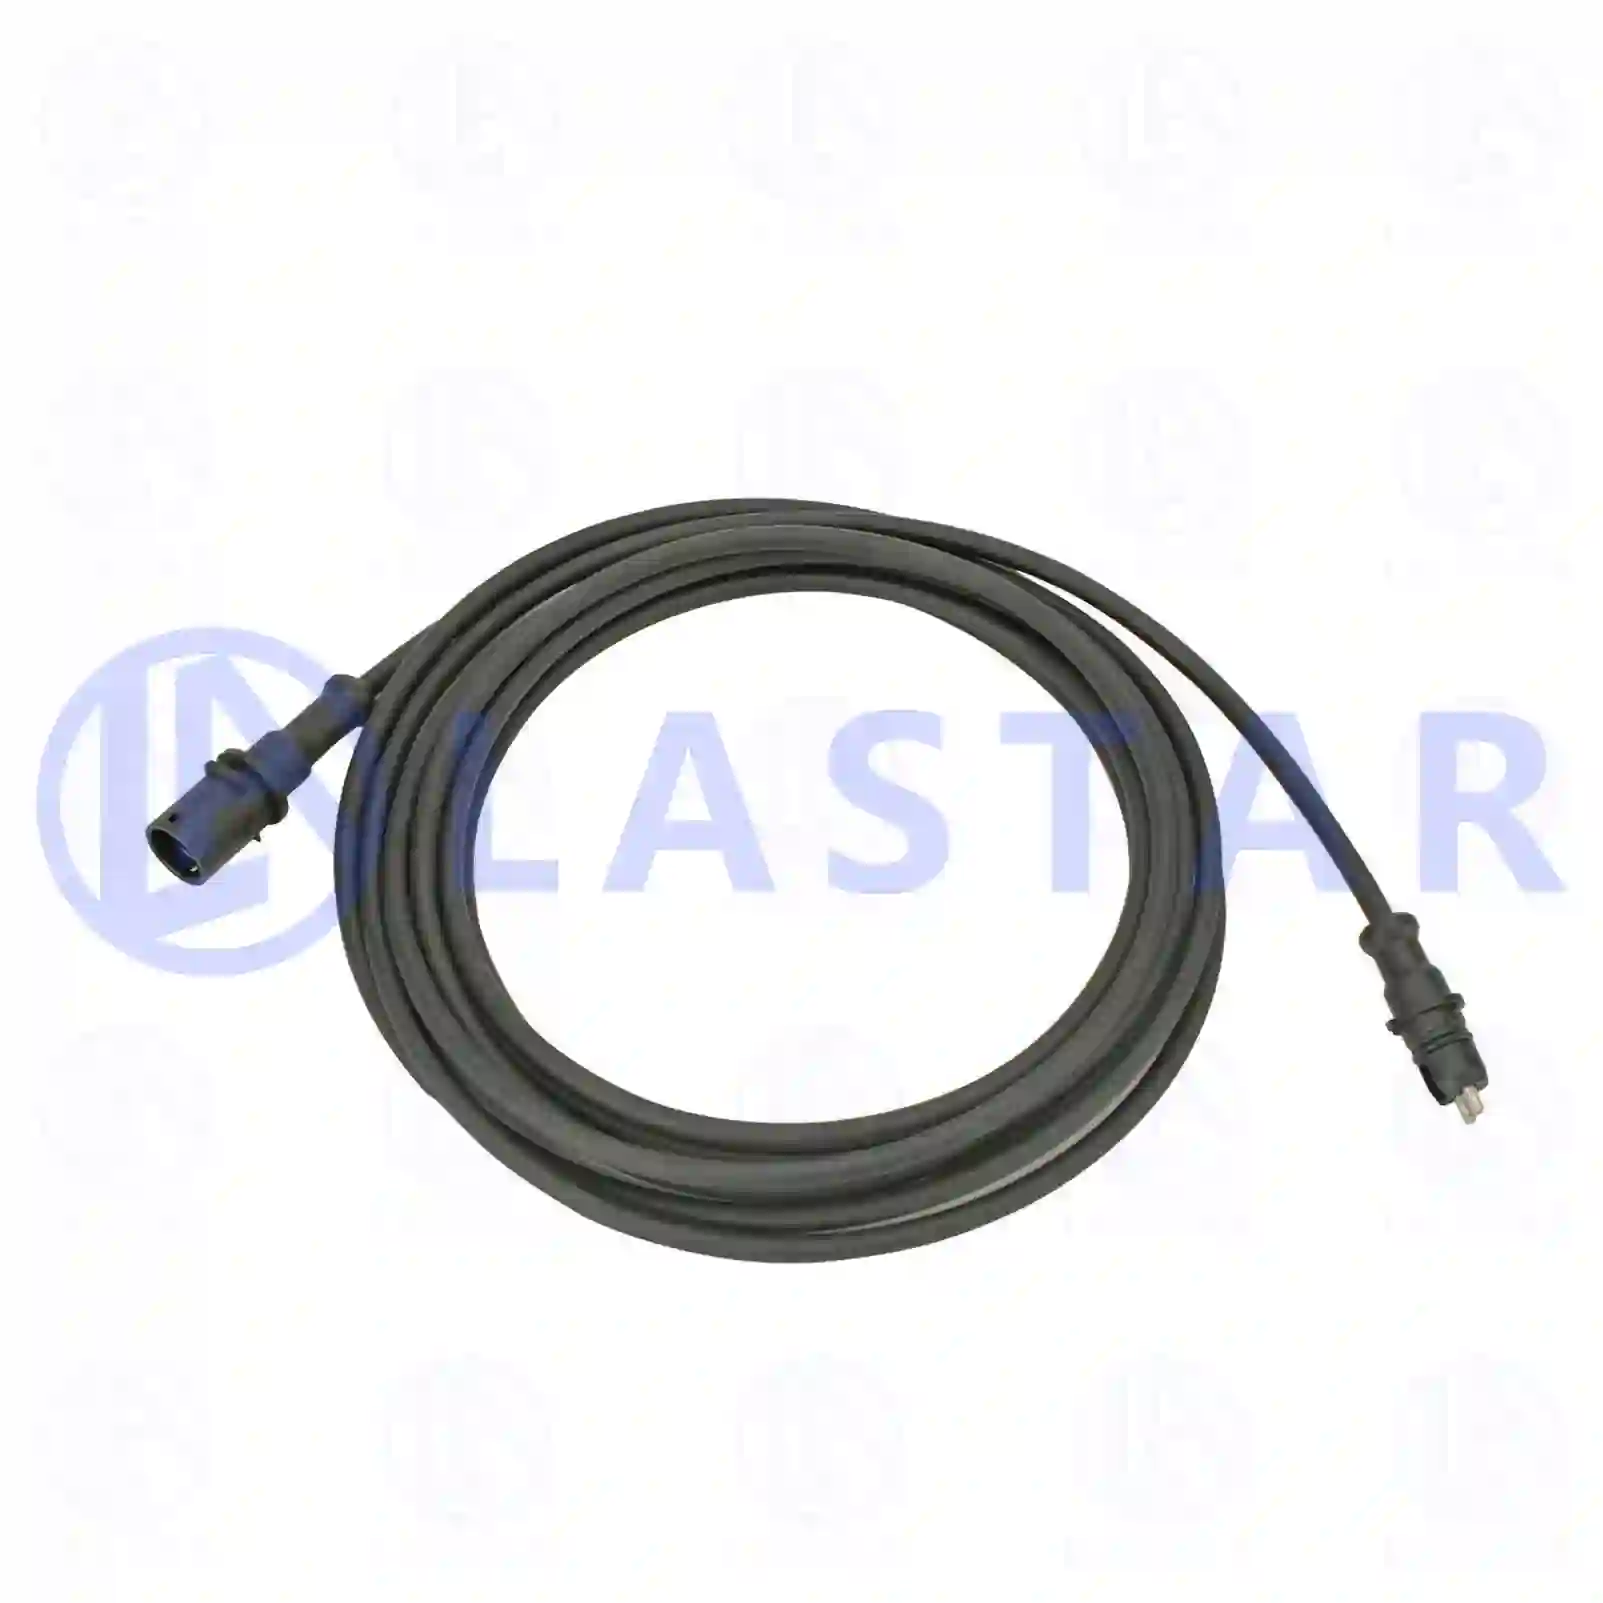 Electrical System ABS cable, la no: 77710210 ,  oem no:#YOK Lastar Spare Part | Truck Spare Parts, Auotomotive Spare Parts